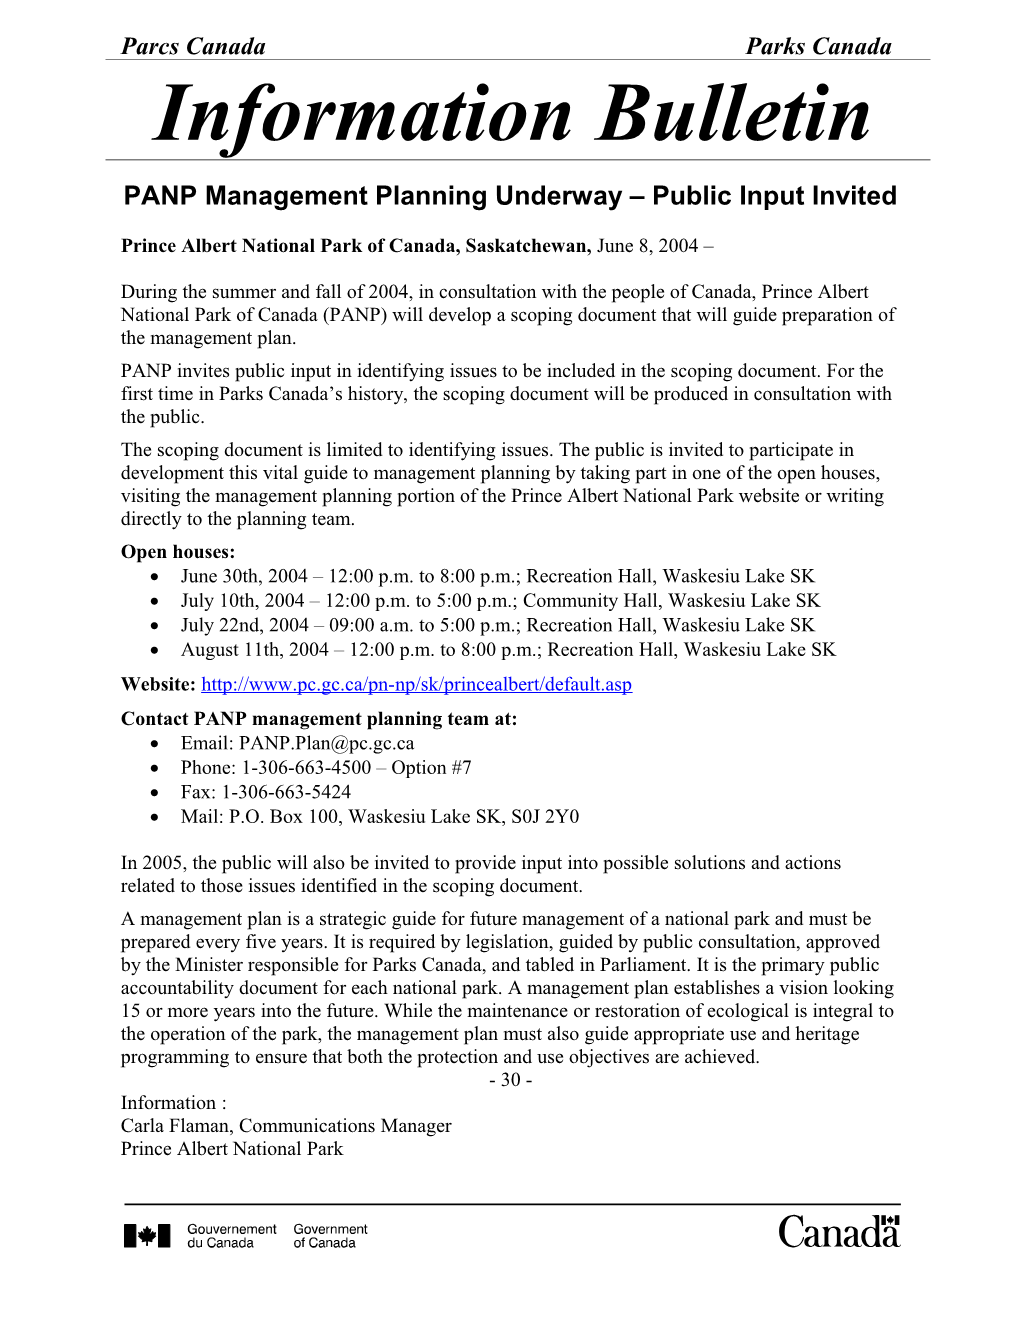 PANP Management Planning Underway Public Input Invited